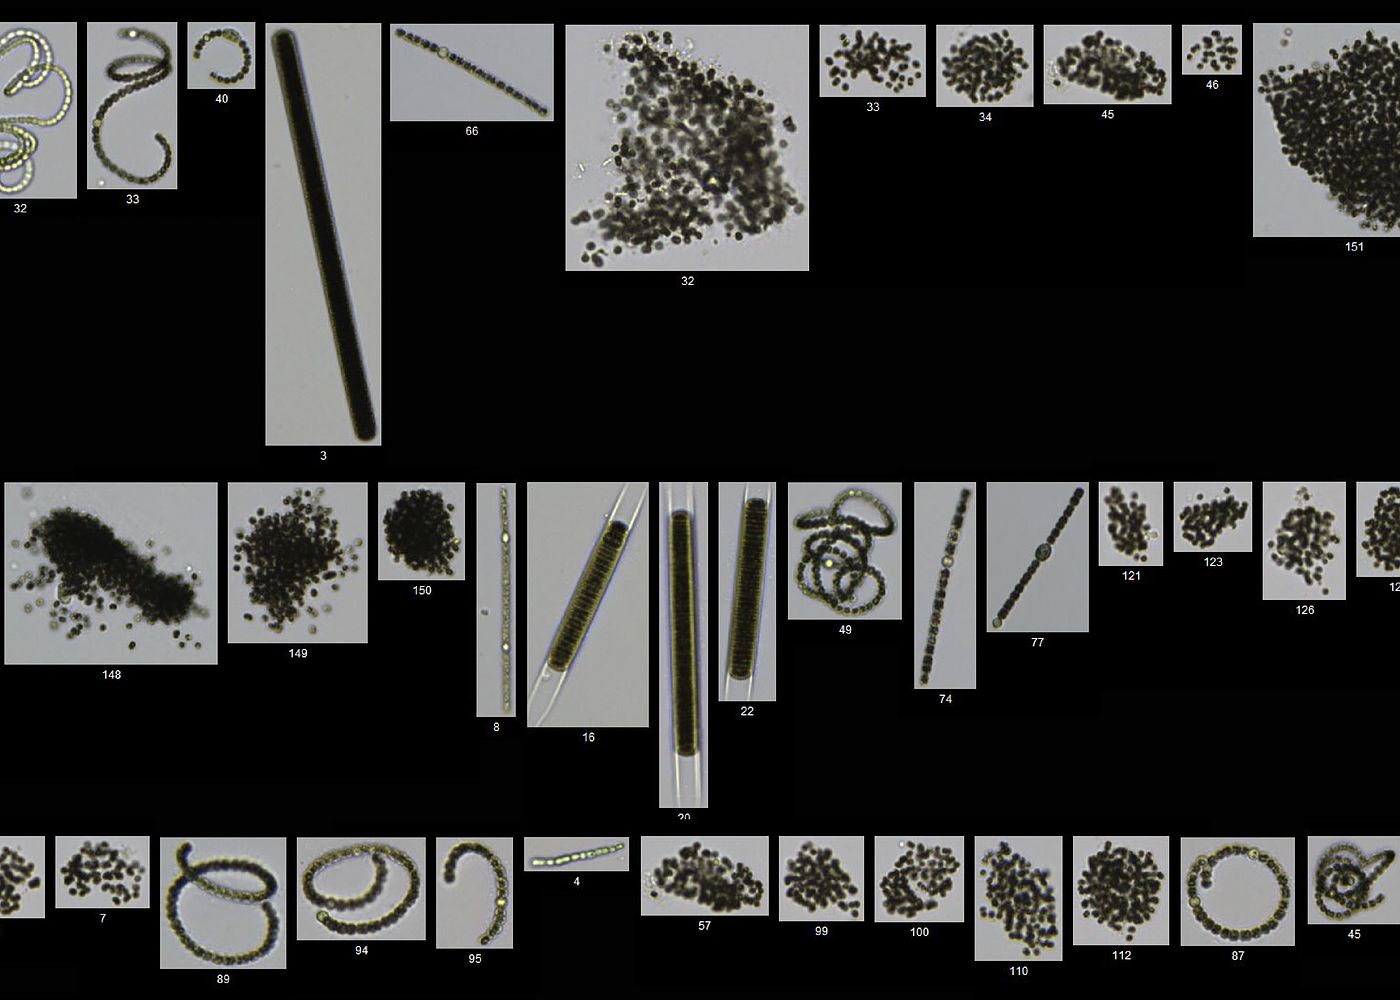 FlowCam particle collage of cyanobacteria - including microcystis, dolichospermum, lyngbya